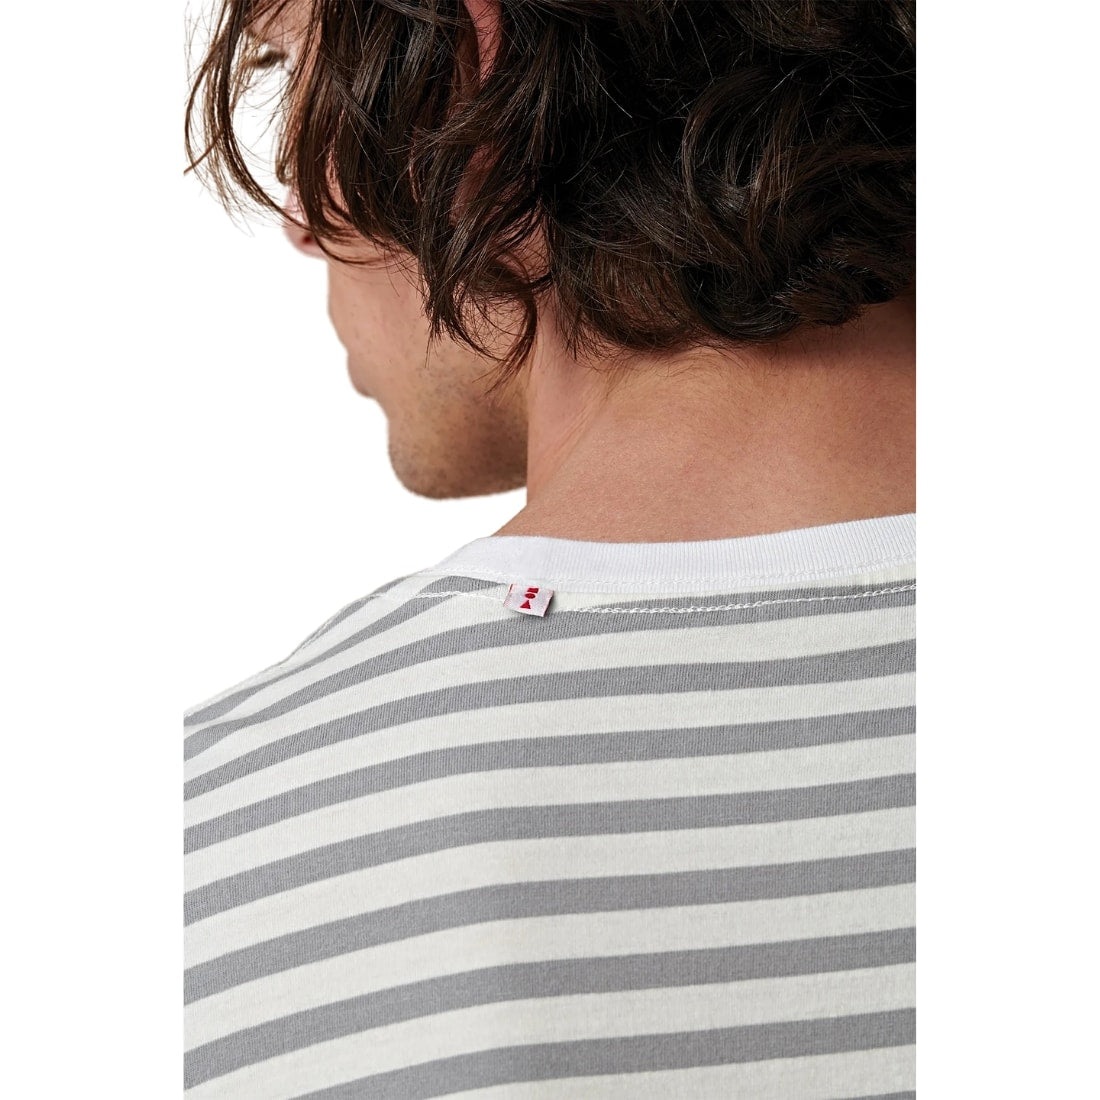 Globe Horizon Stripe T-Shirt - White - Mens Surf Brand T-Shirt by Globe